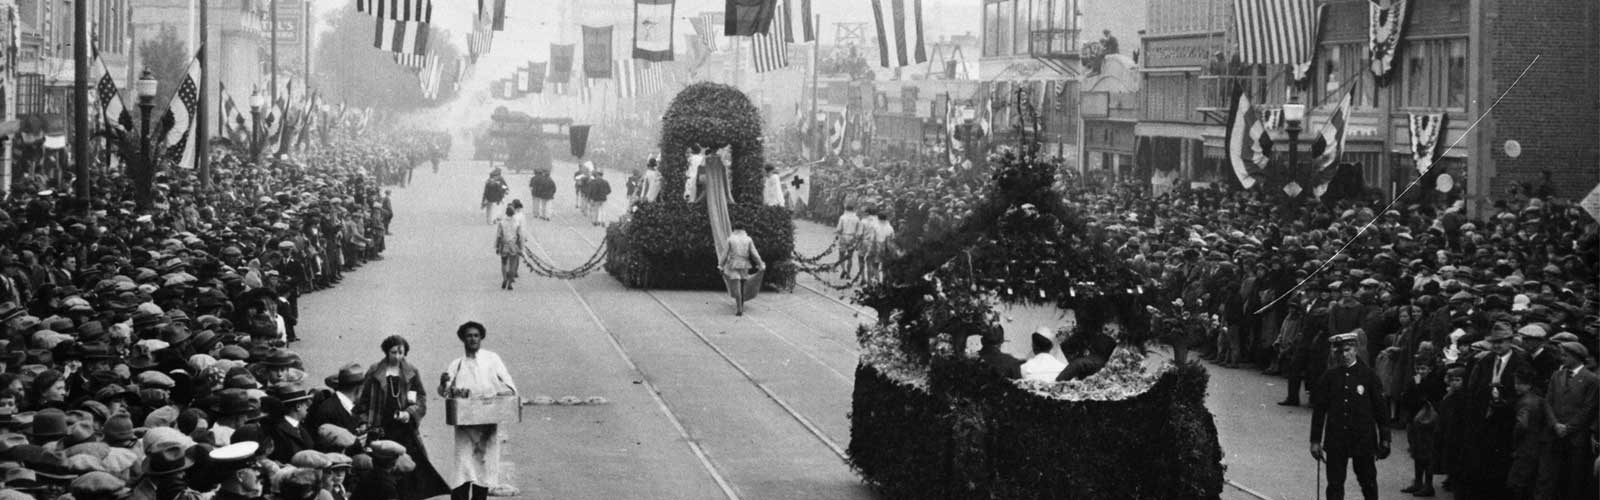 An early iteration of The Rose Parade, Pasadena, California c. 1910